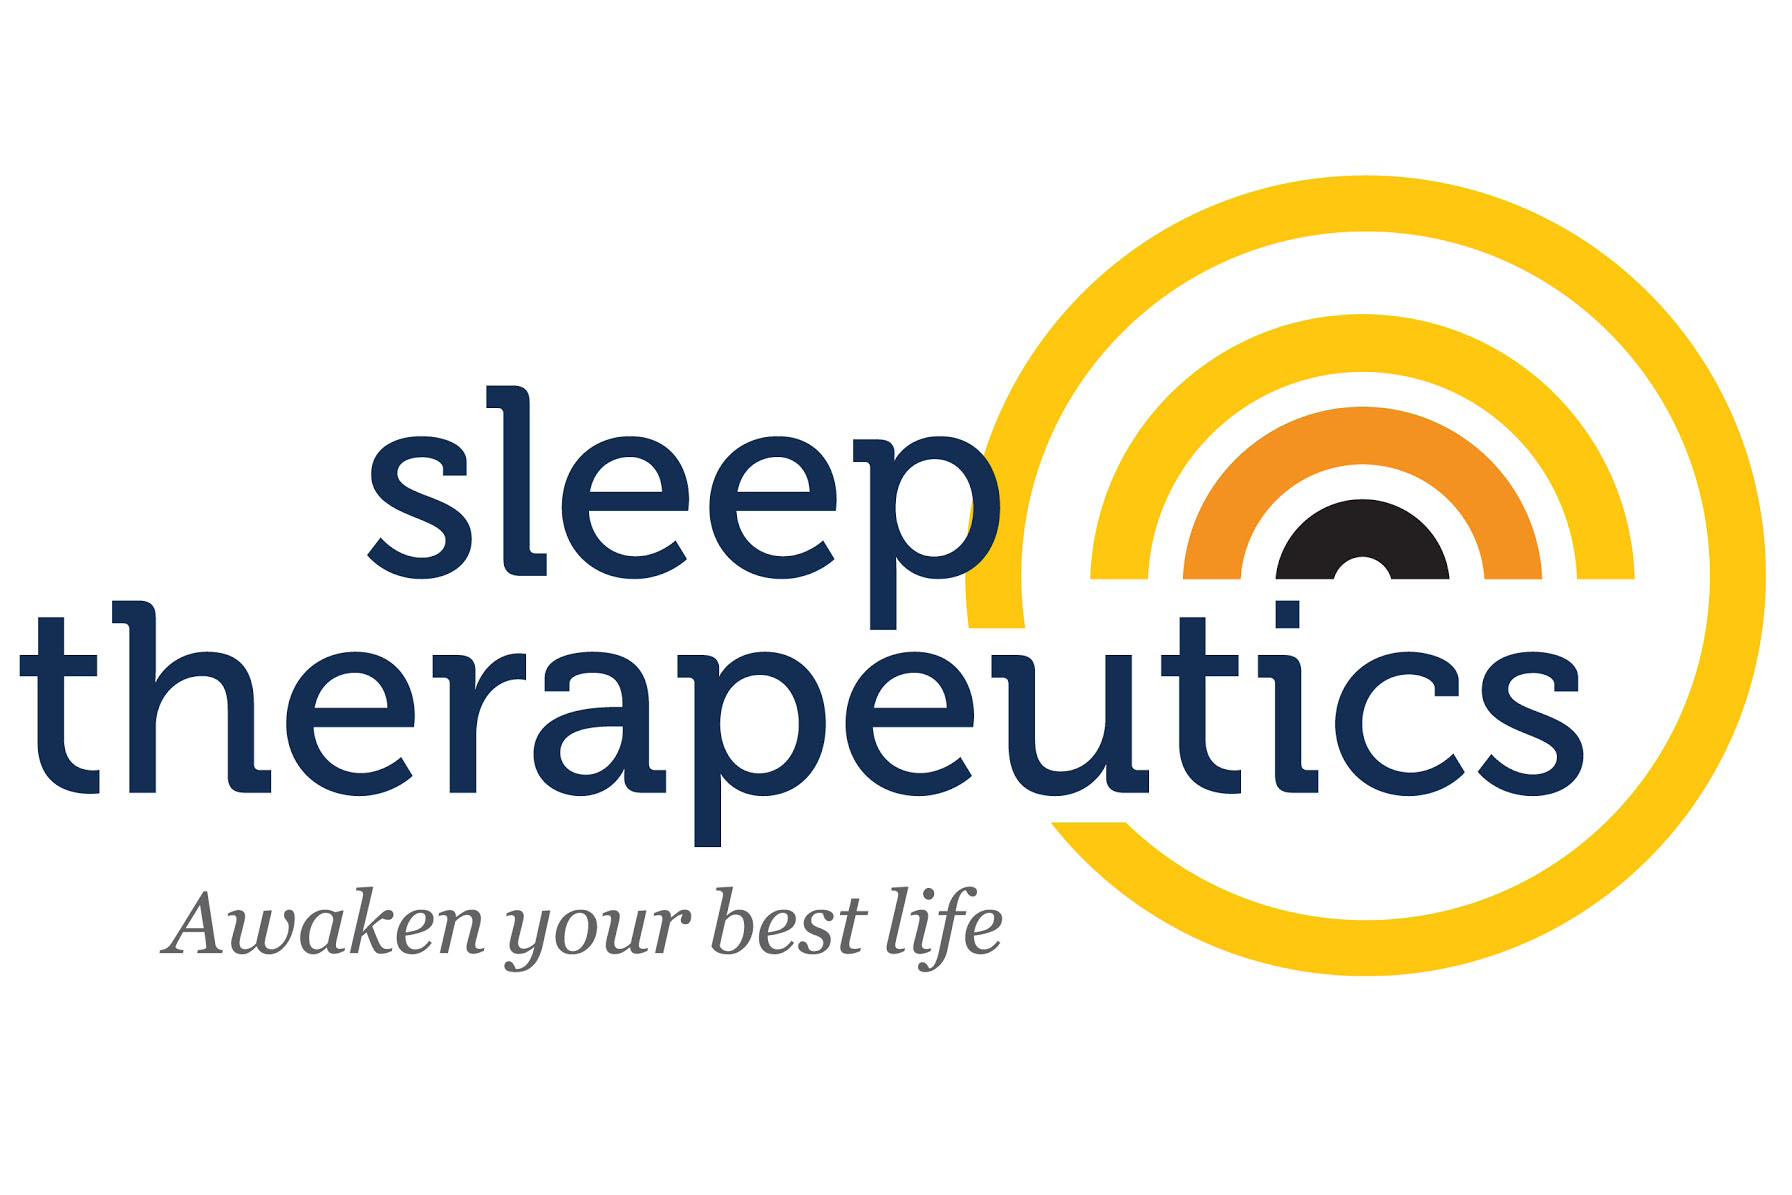 Sleep Therapeutics